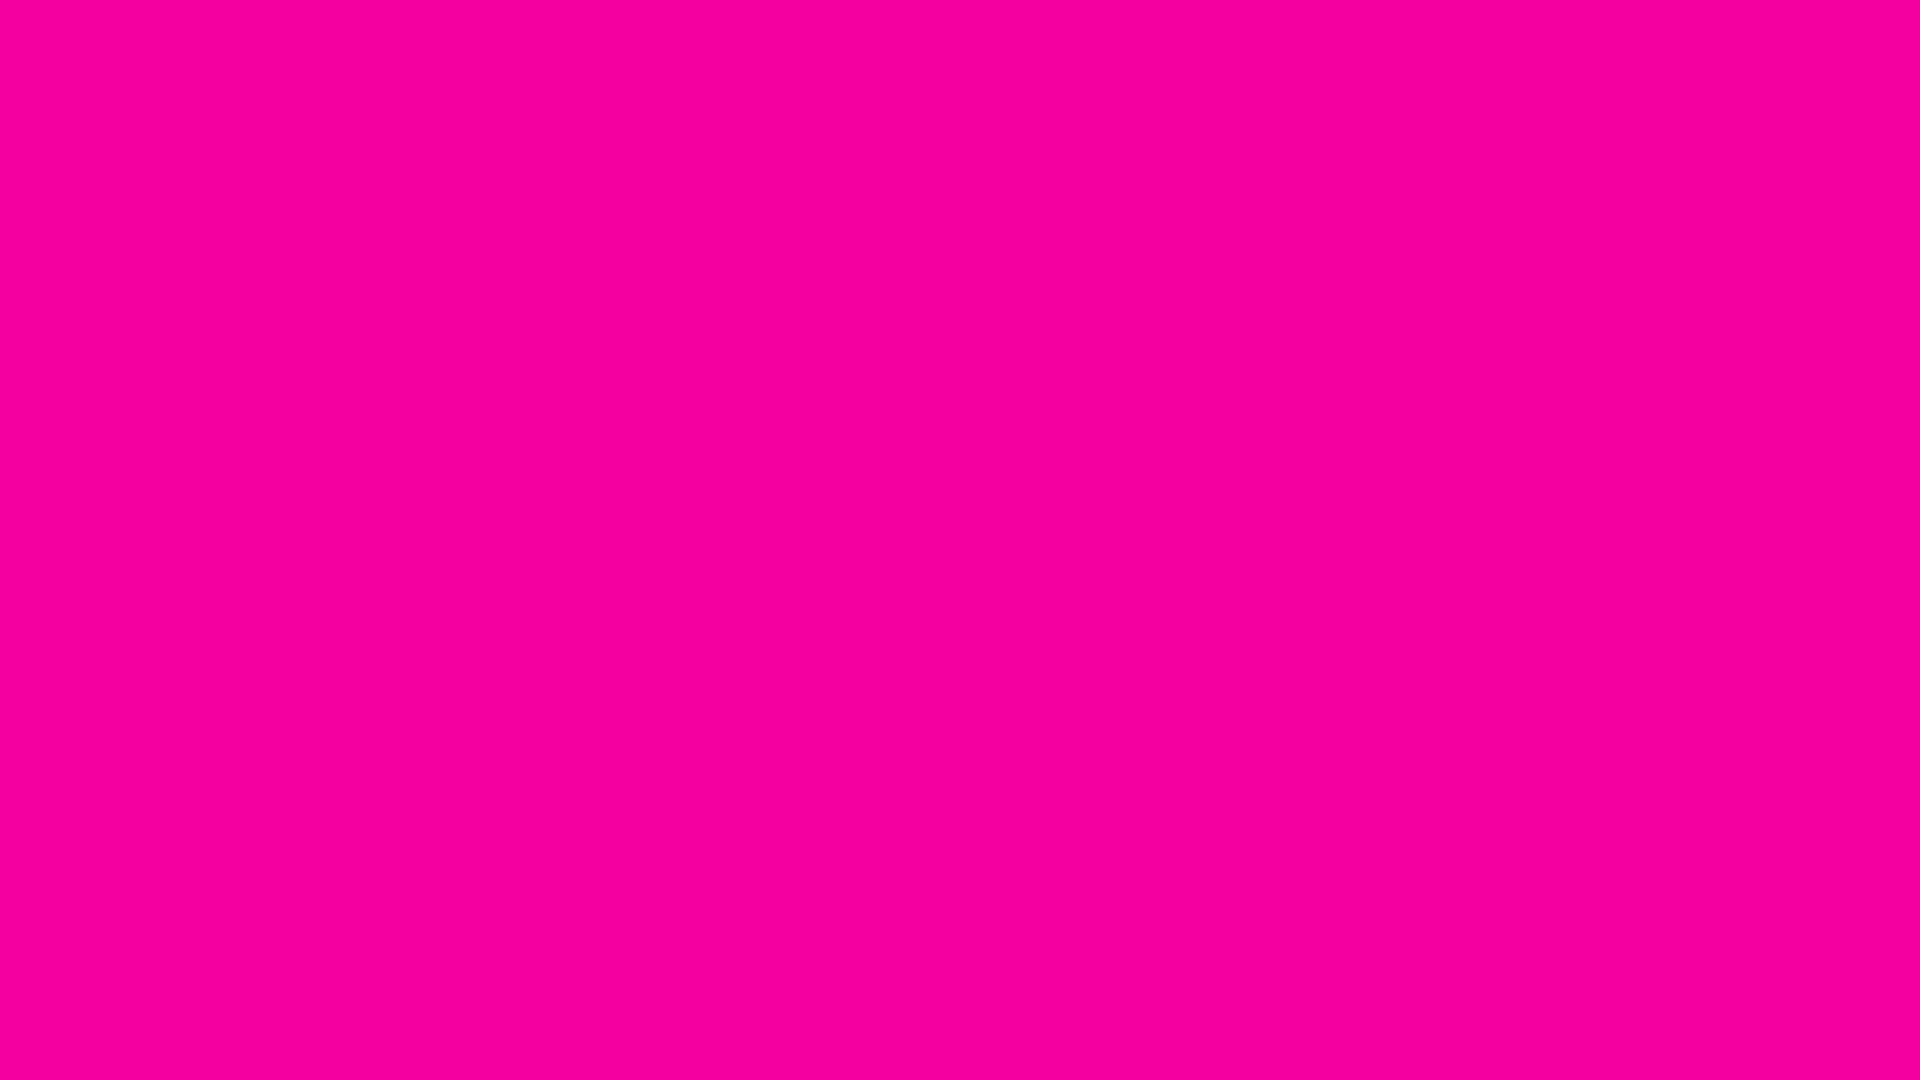 Hollywood Cerise pink